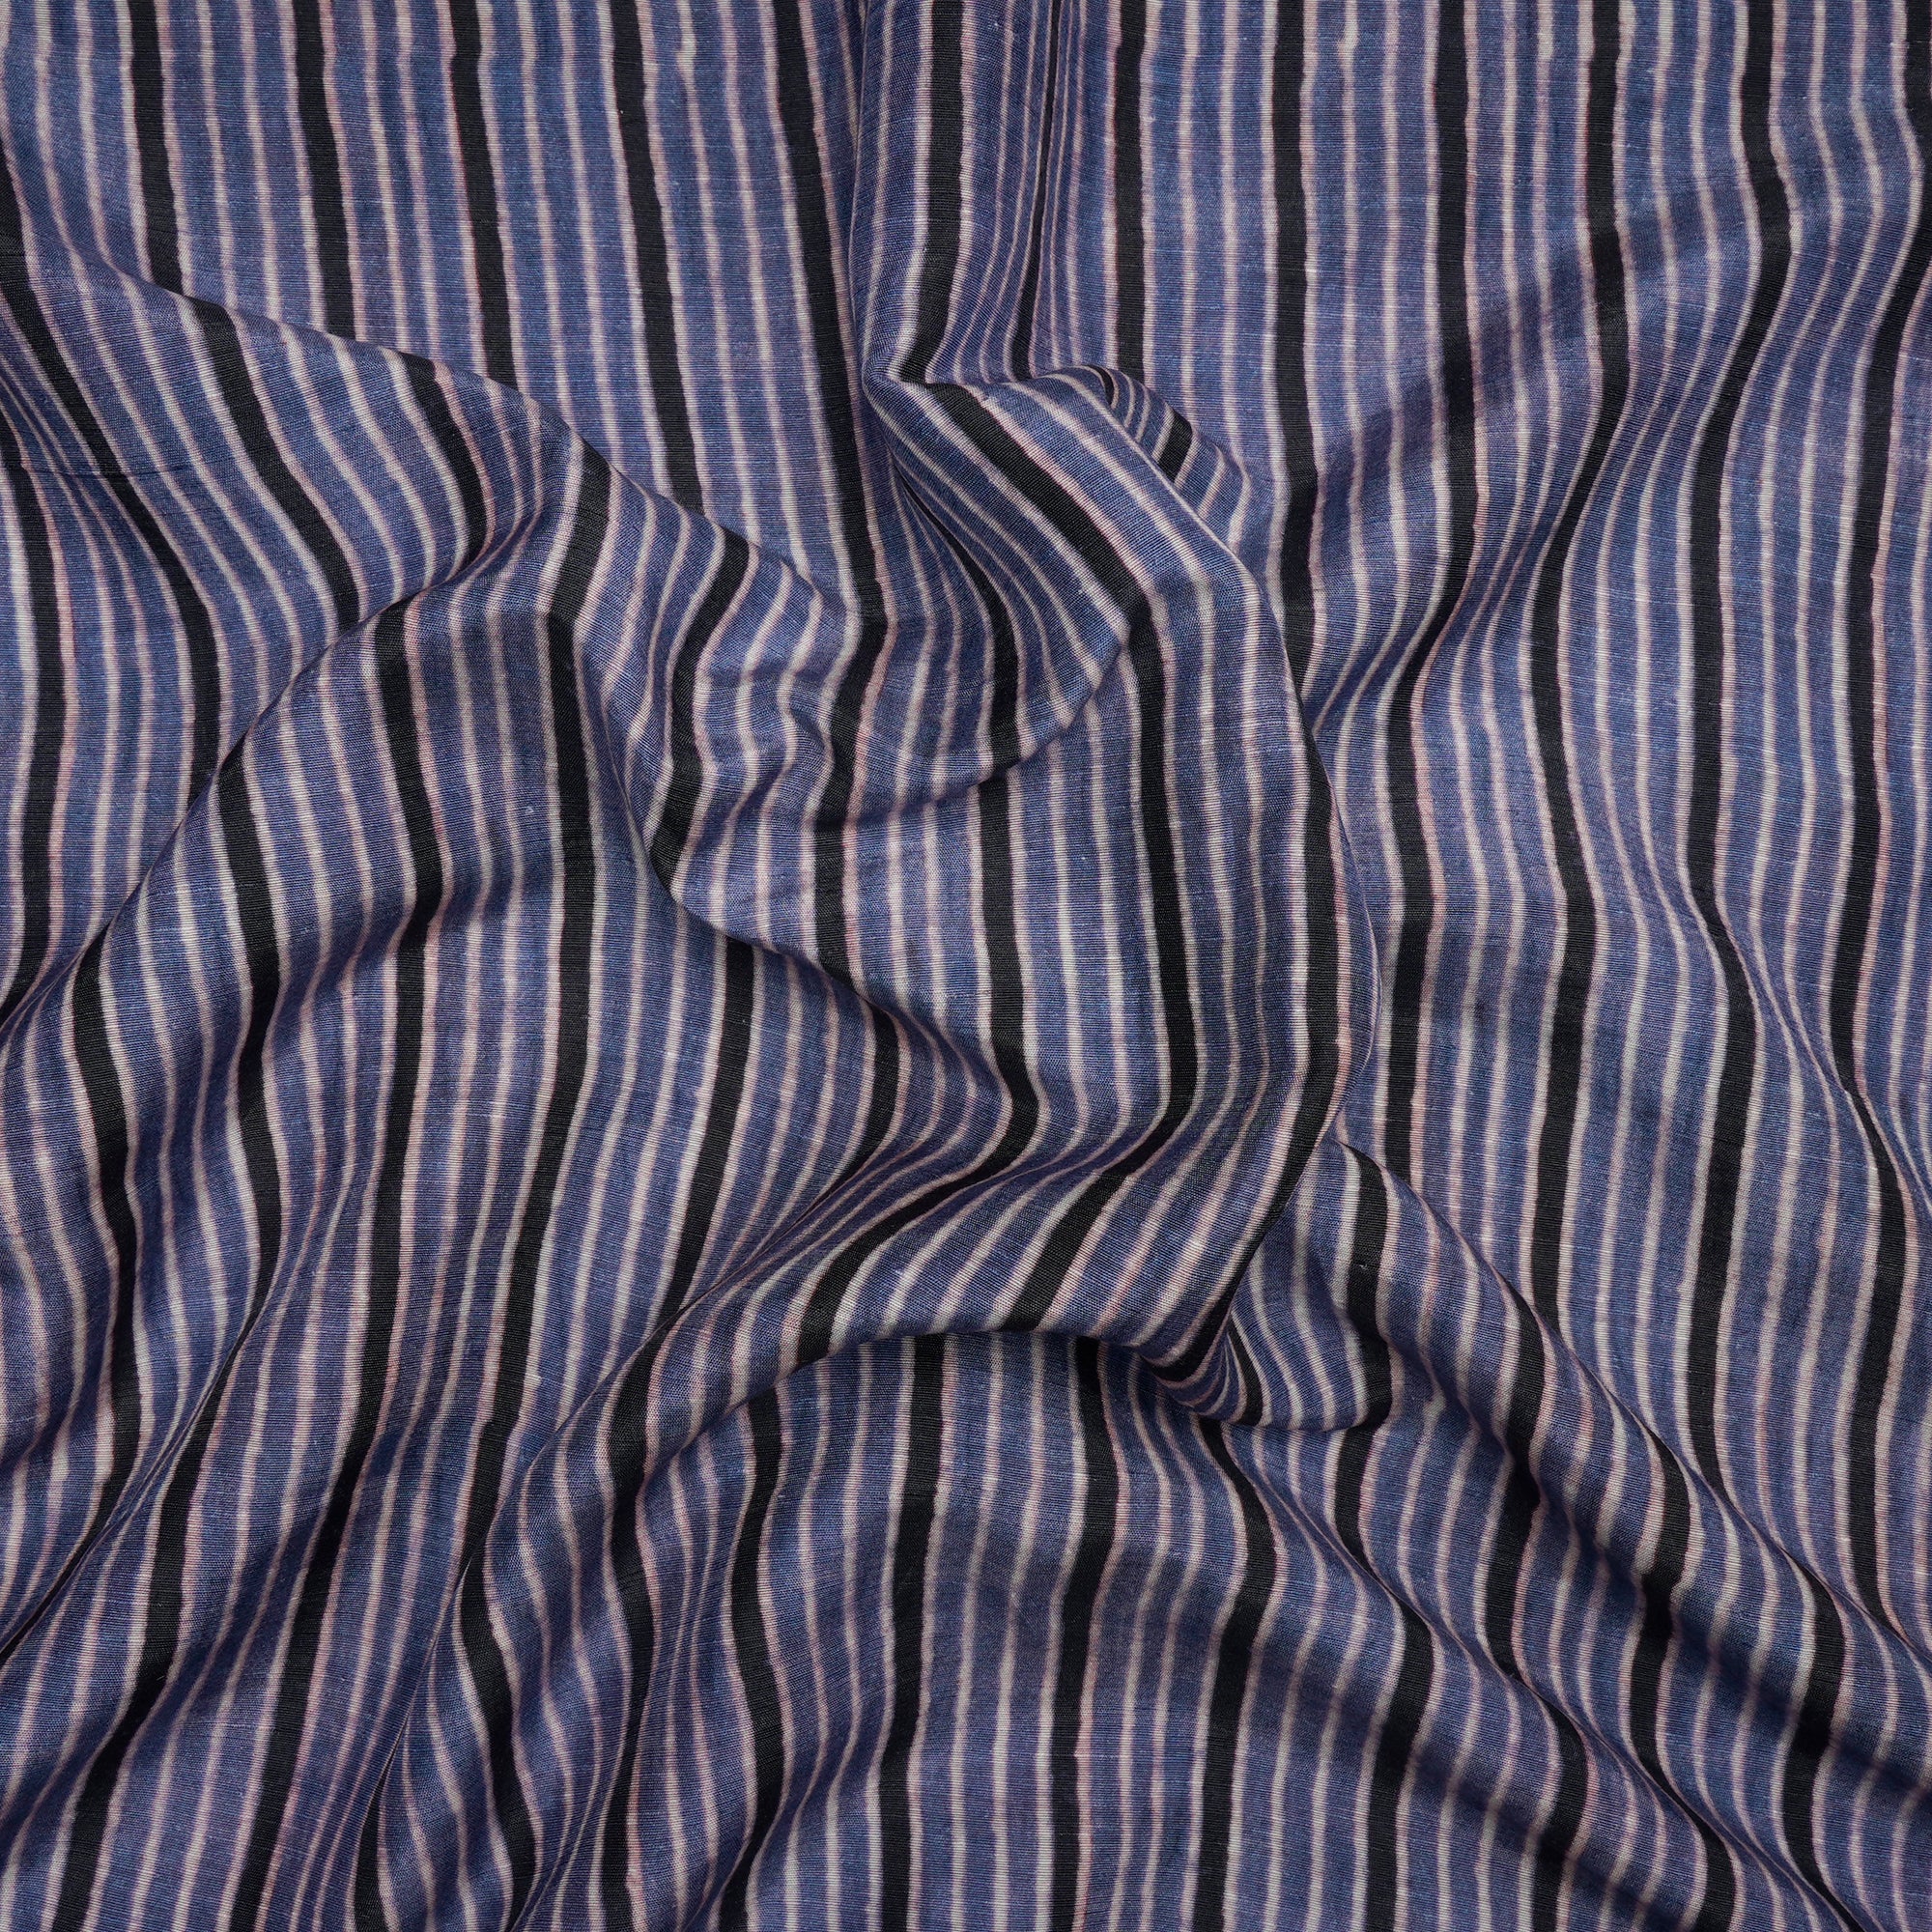 Ultramarine Strip Pattern Digital Printed Bemberg Linen Fabric